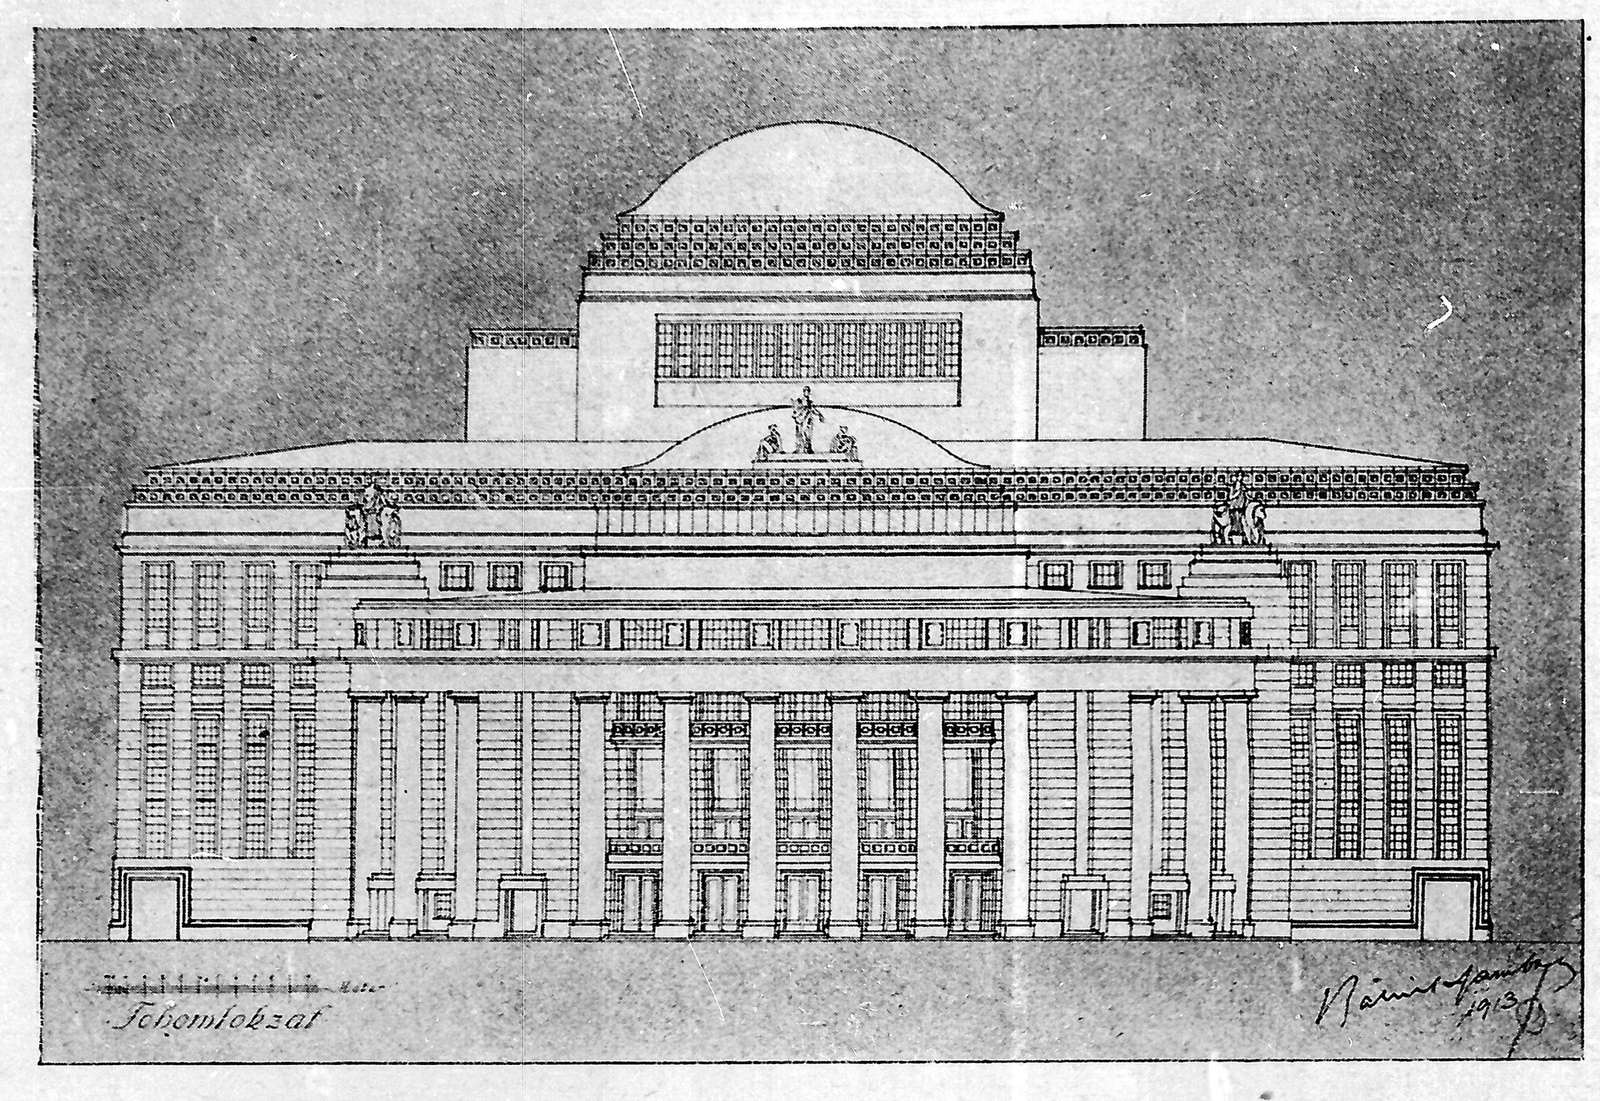 NemzetiSzinhaz-Astoria-Palyazat-1913-BalintZoltan-JamborLajos-2e